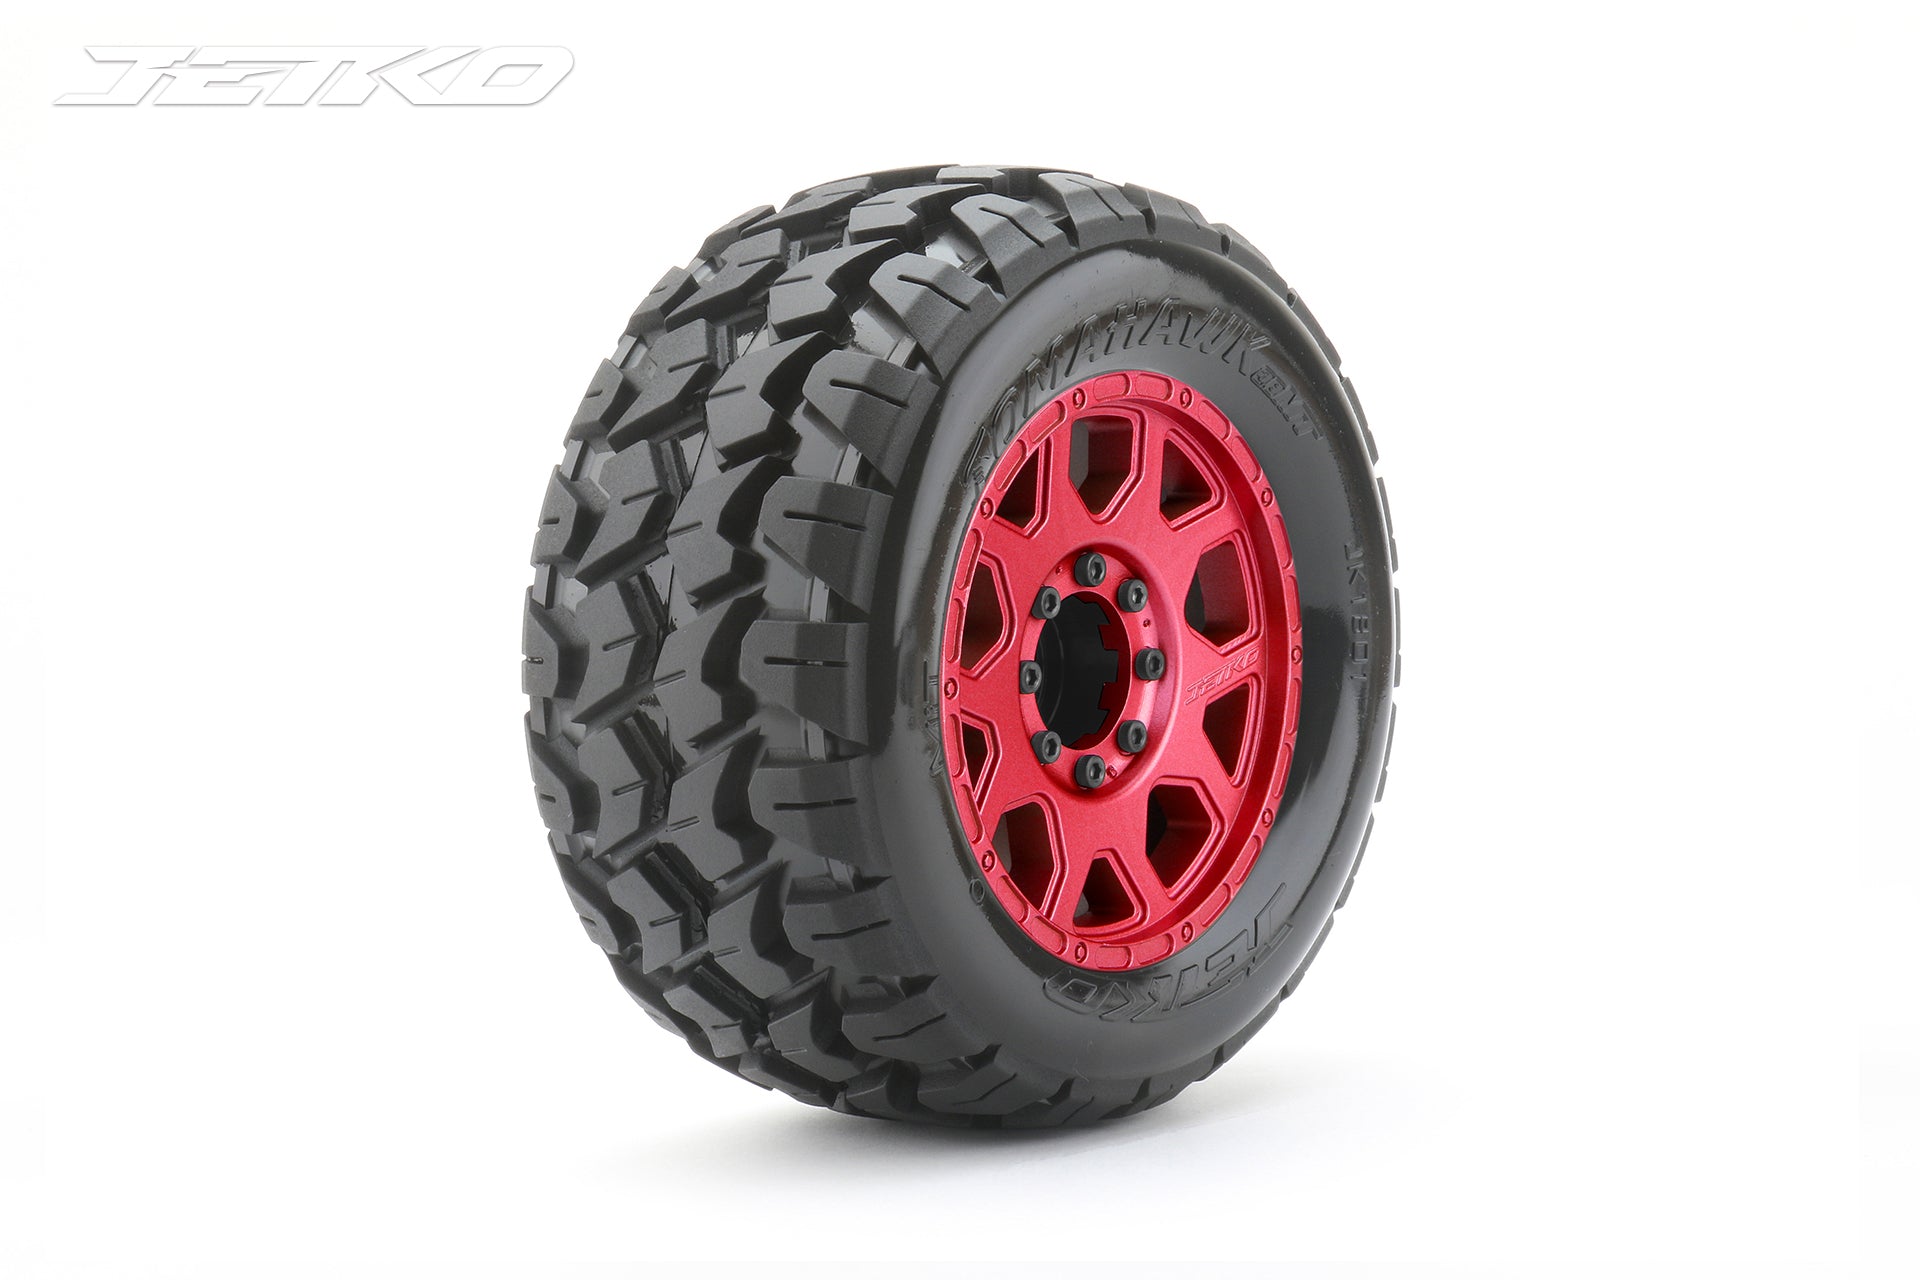 Jetko-Jetko 1/8 MT 3.8 EX-KING COBRA Tyres (Claw Rim/Metal Red/Med Soft/Belted/17mm 0 o/s) [1802CRMSGBB1]-rc-cars-scale-models-sunshine-coast